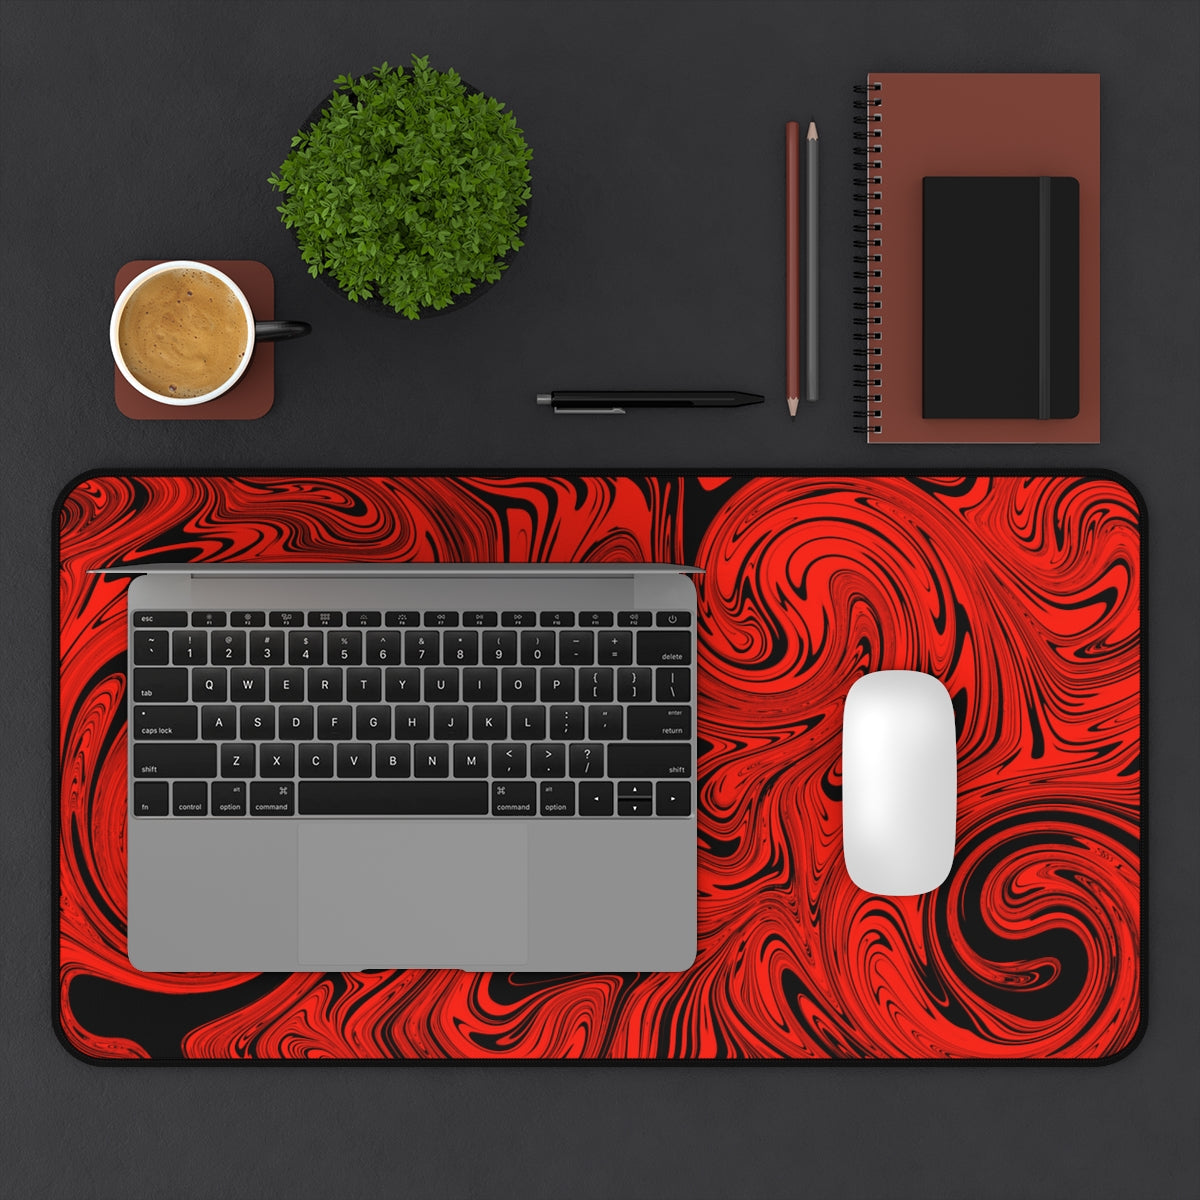 Black & Red Swirl Desk Mat - Desk Cookies